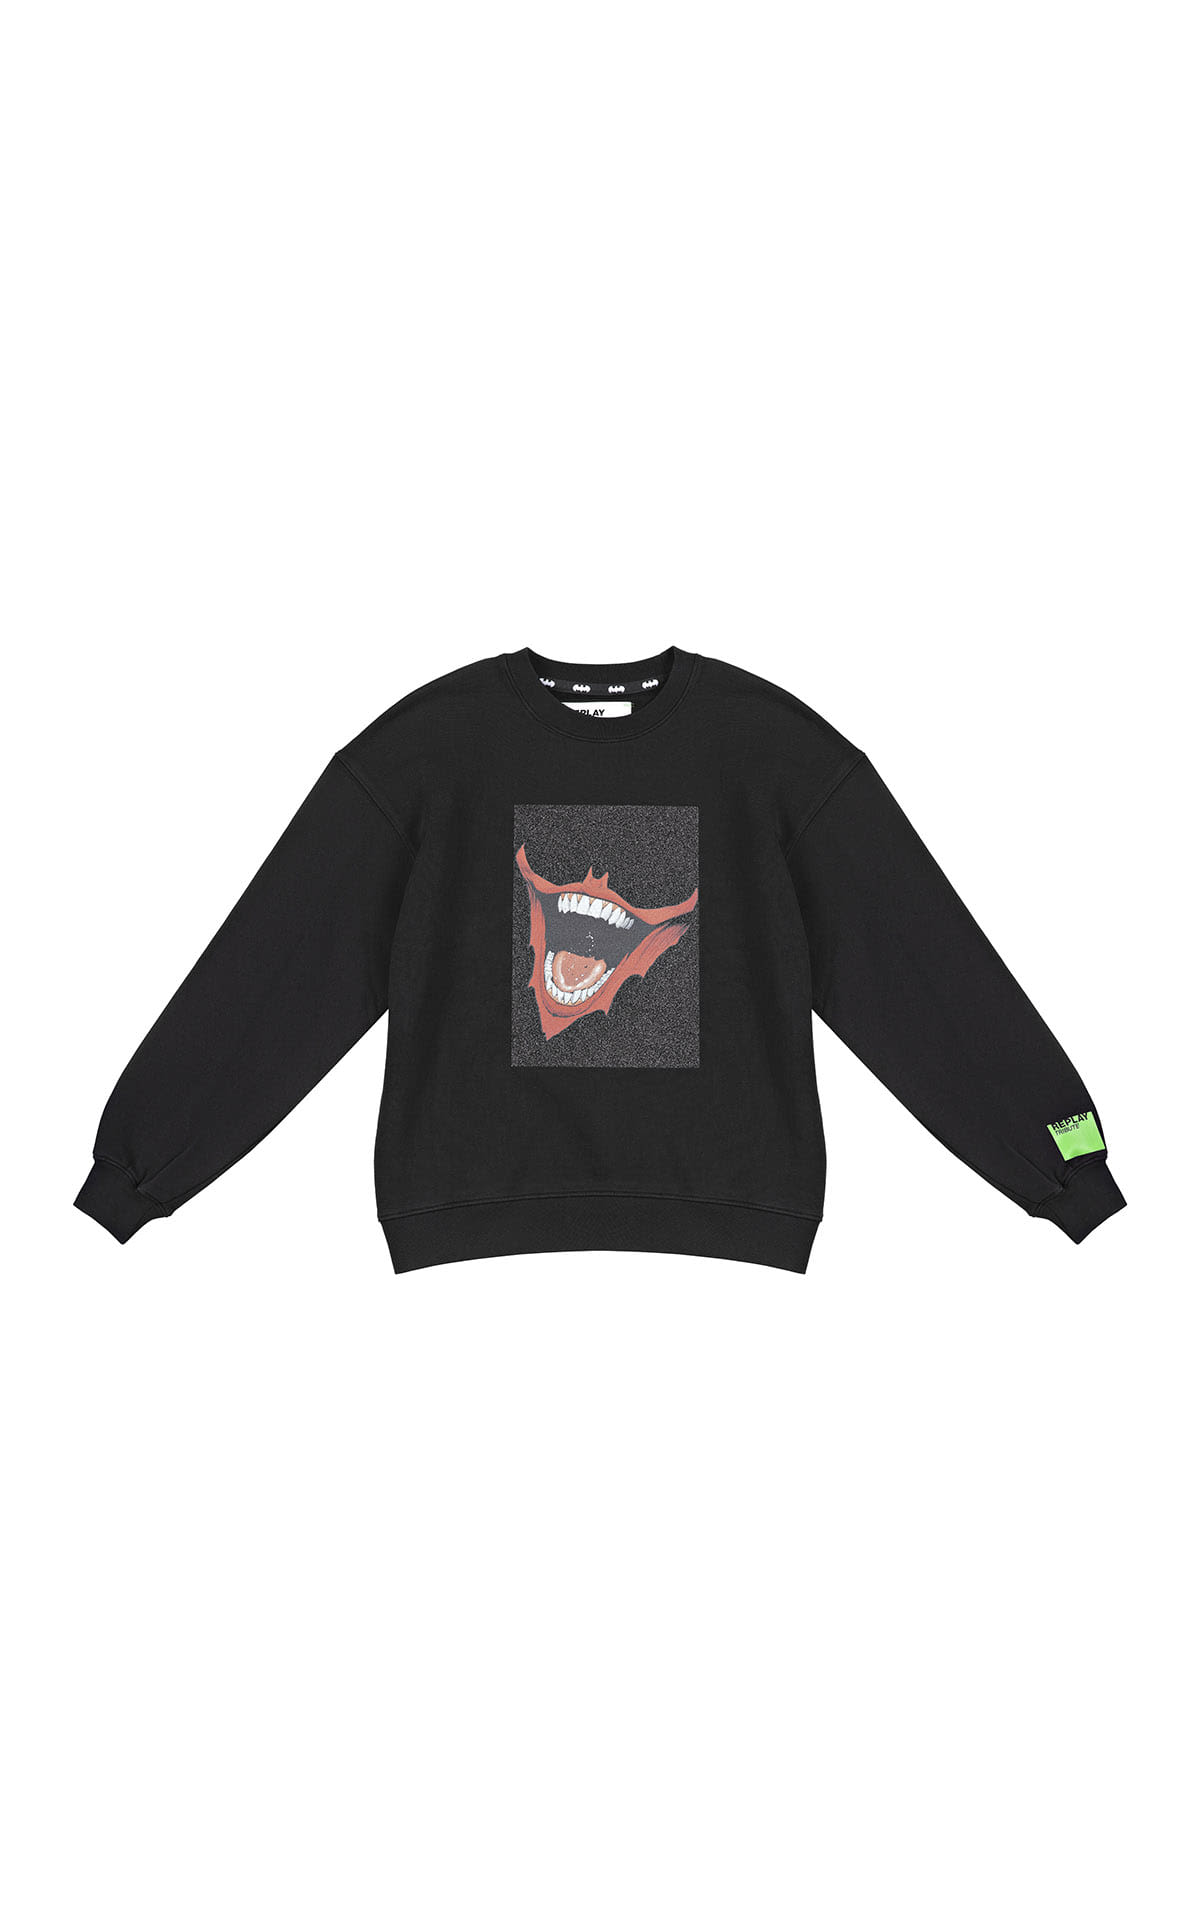 Black batman sweatshirt